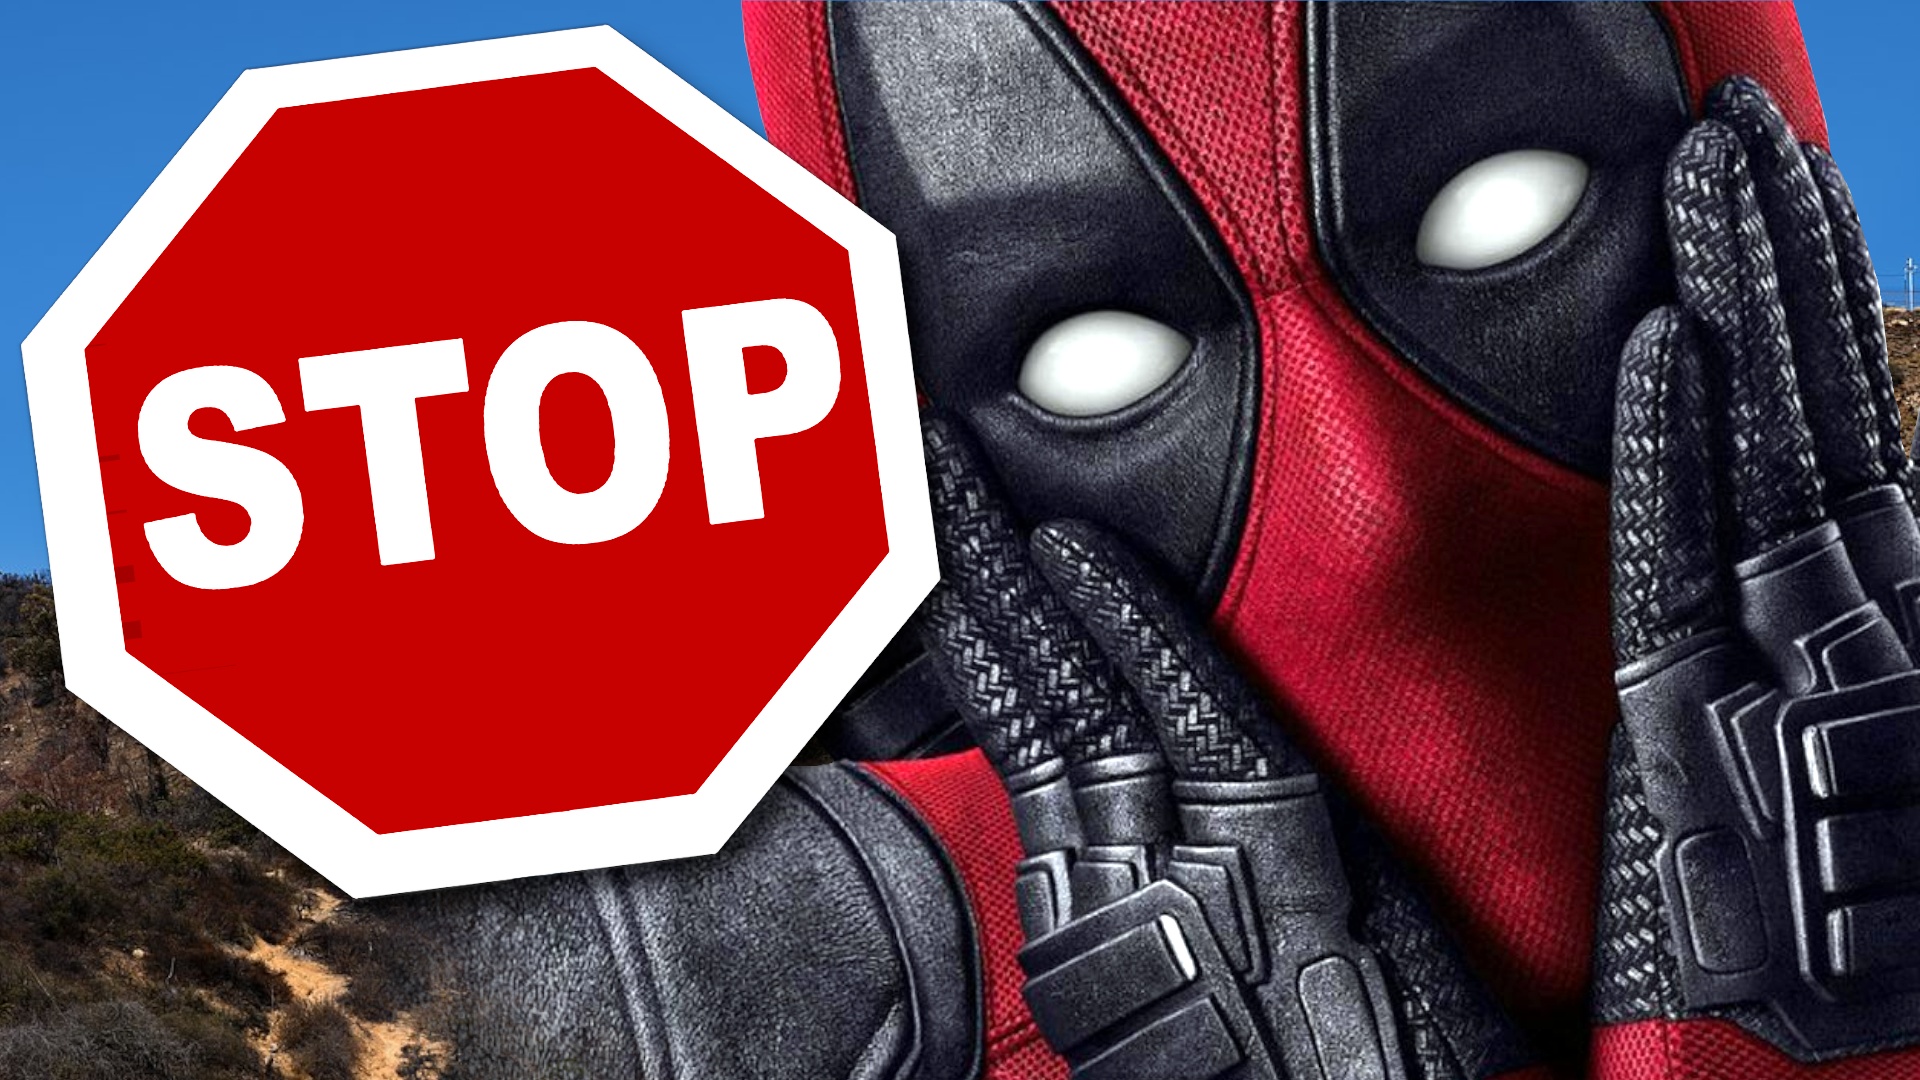 #Mega-Streik in Hollywood: Produktion aller Filme und Serien gestoppt, inklusive Deadpool 3 und Stranger Things